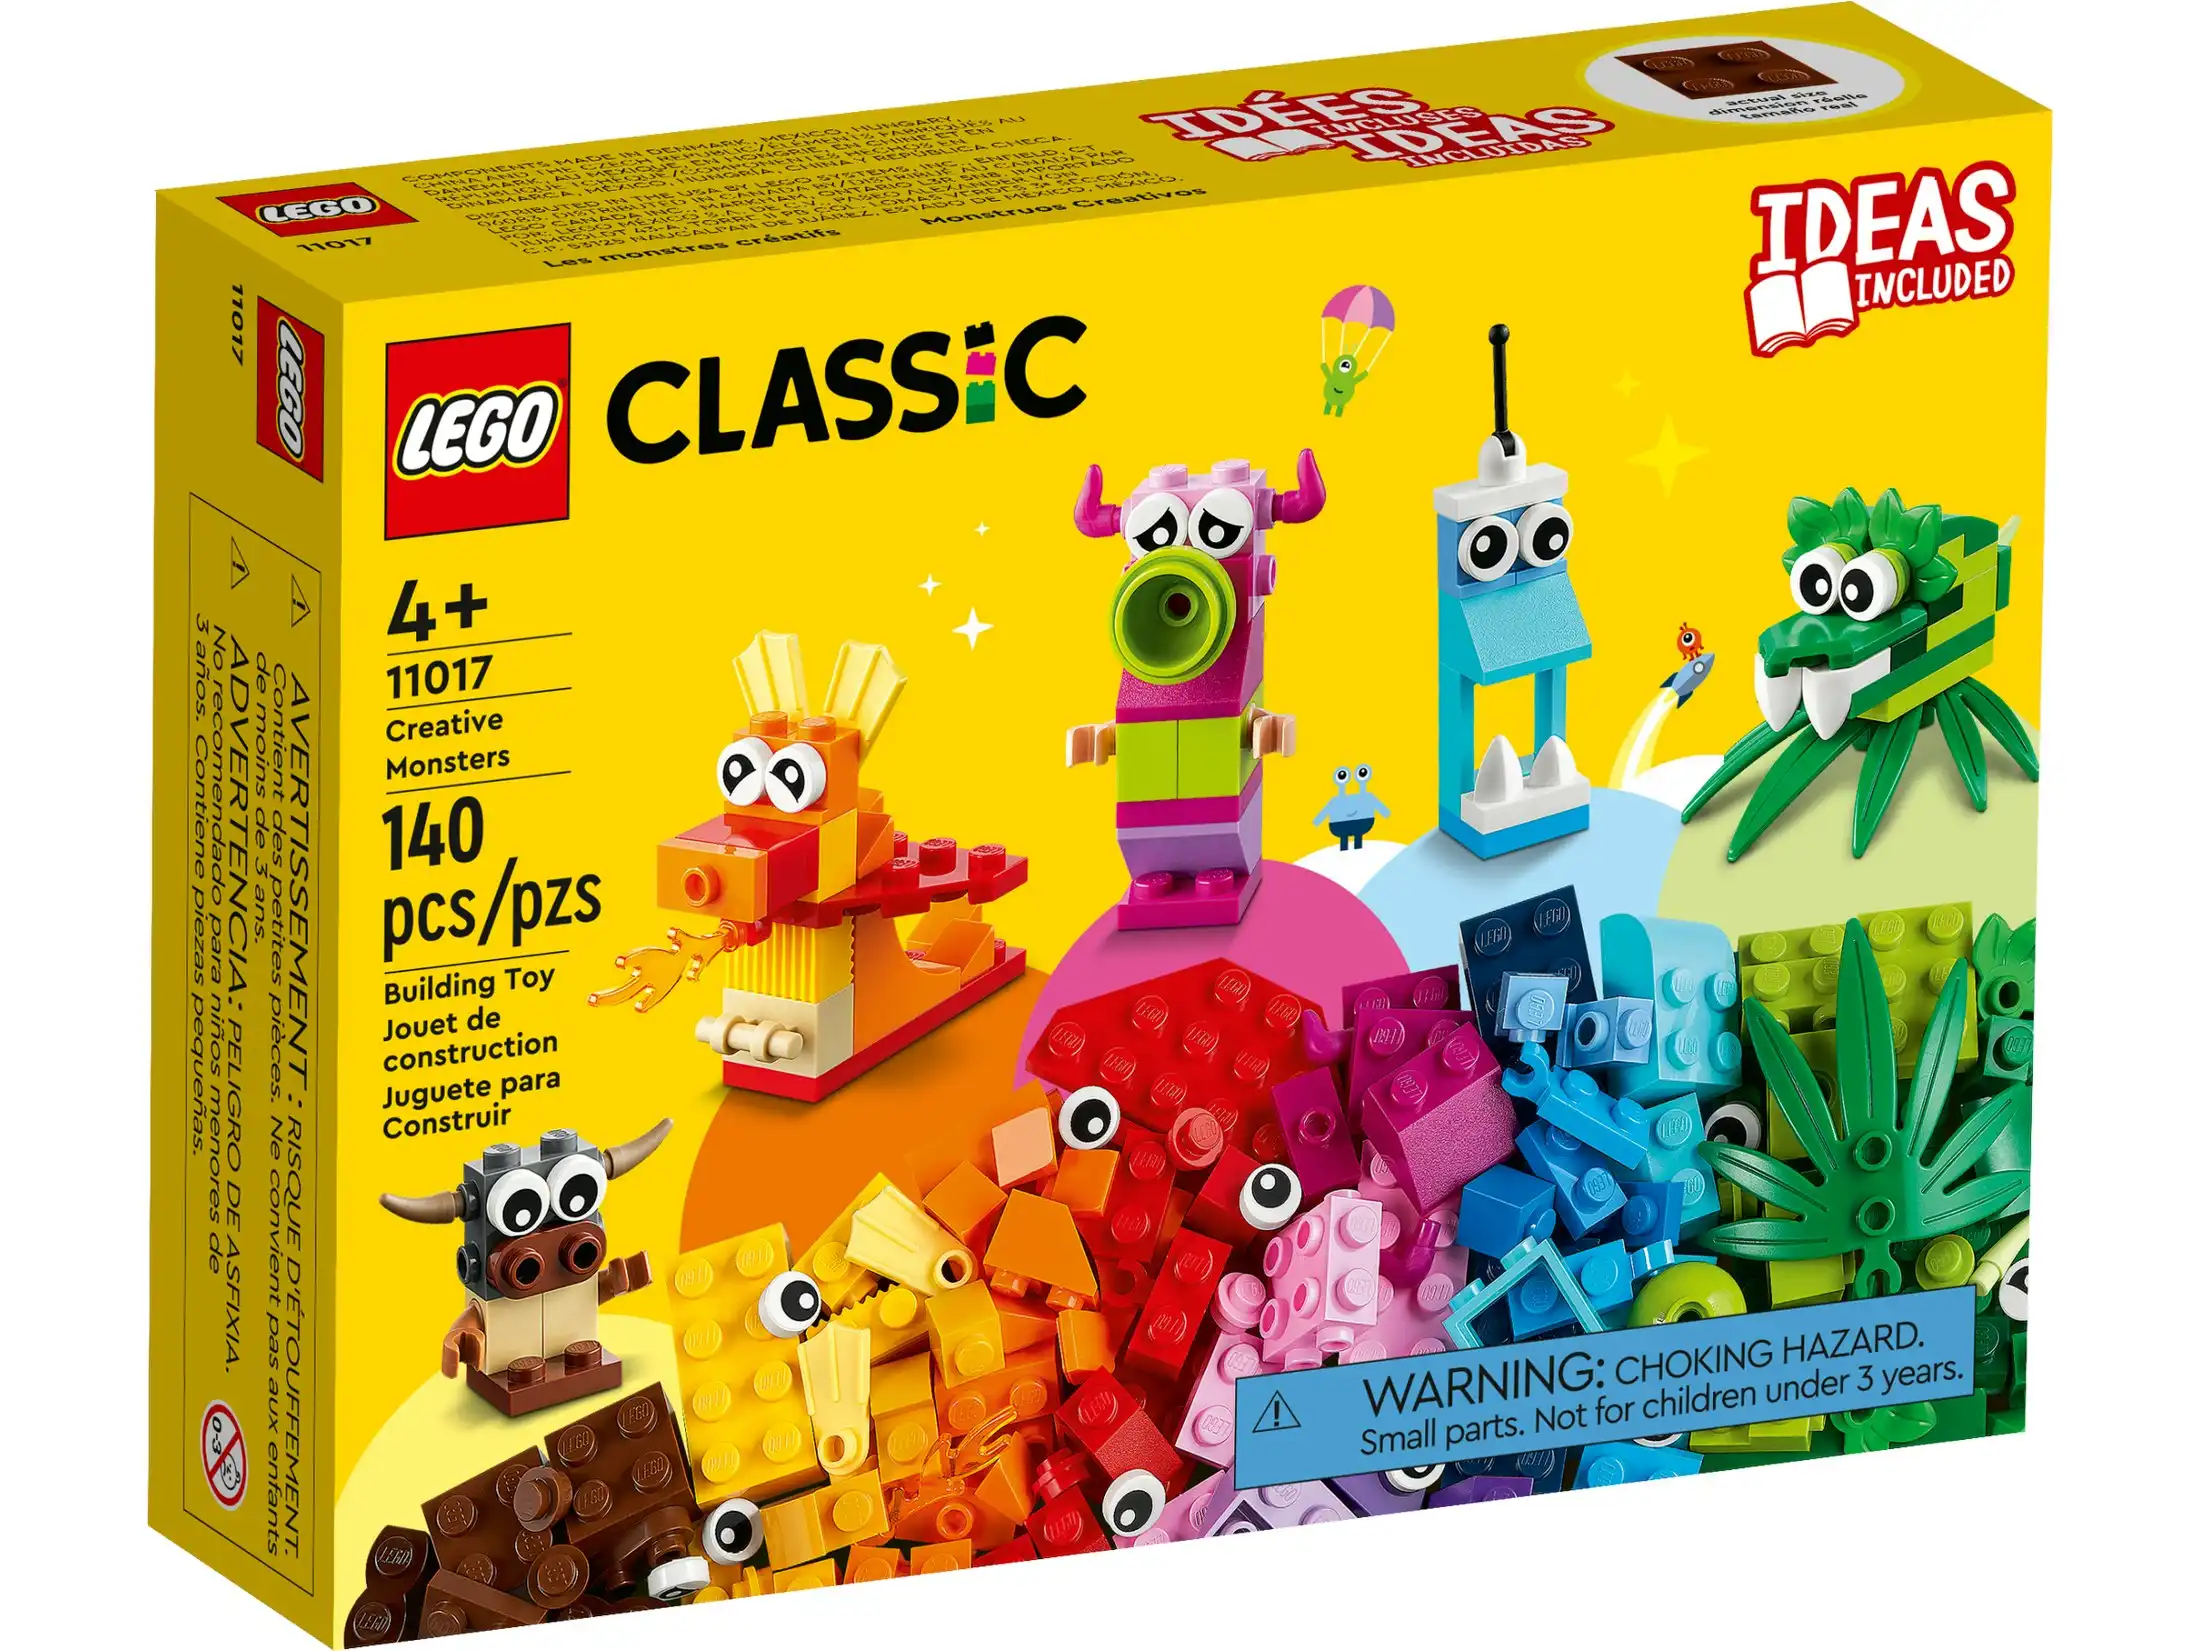 LEGO 11017 Creative Monsters - Classic 4+